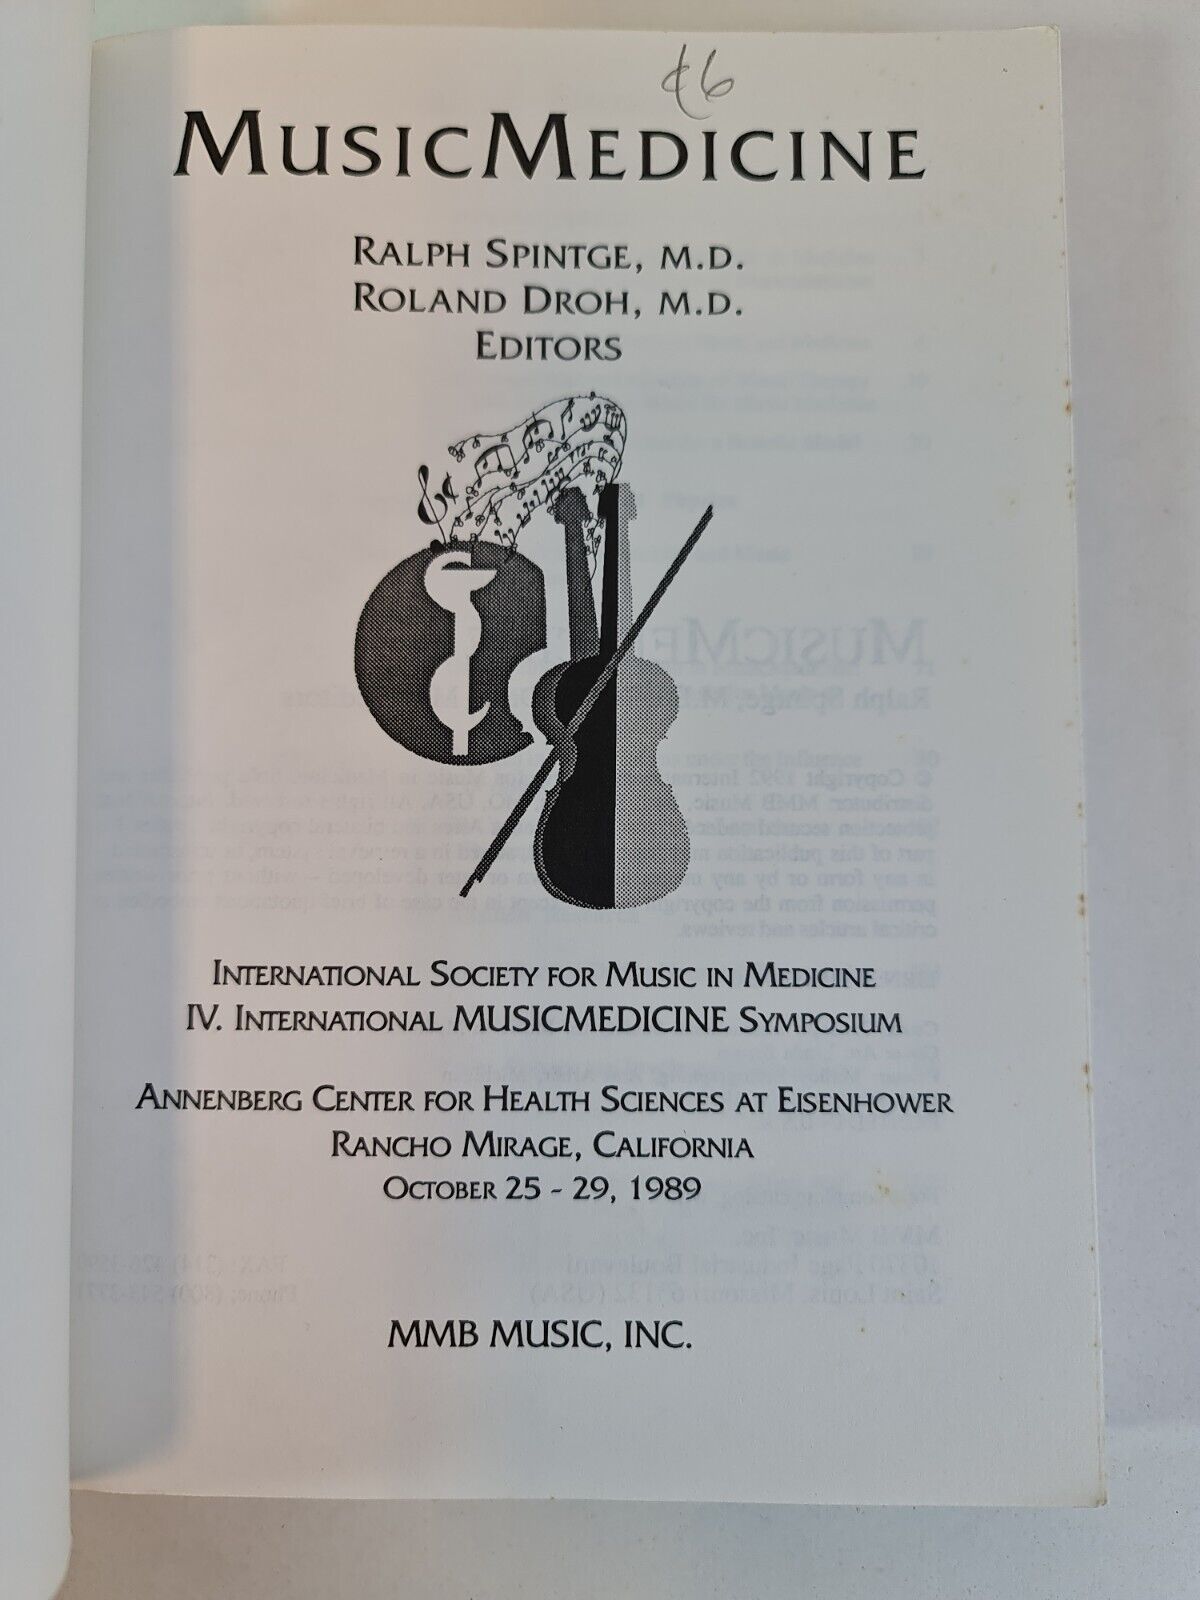 Music Medicine by Ralph Spintge